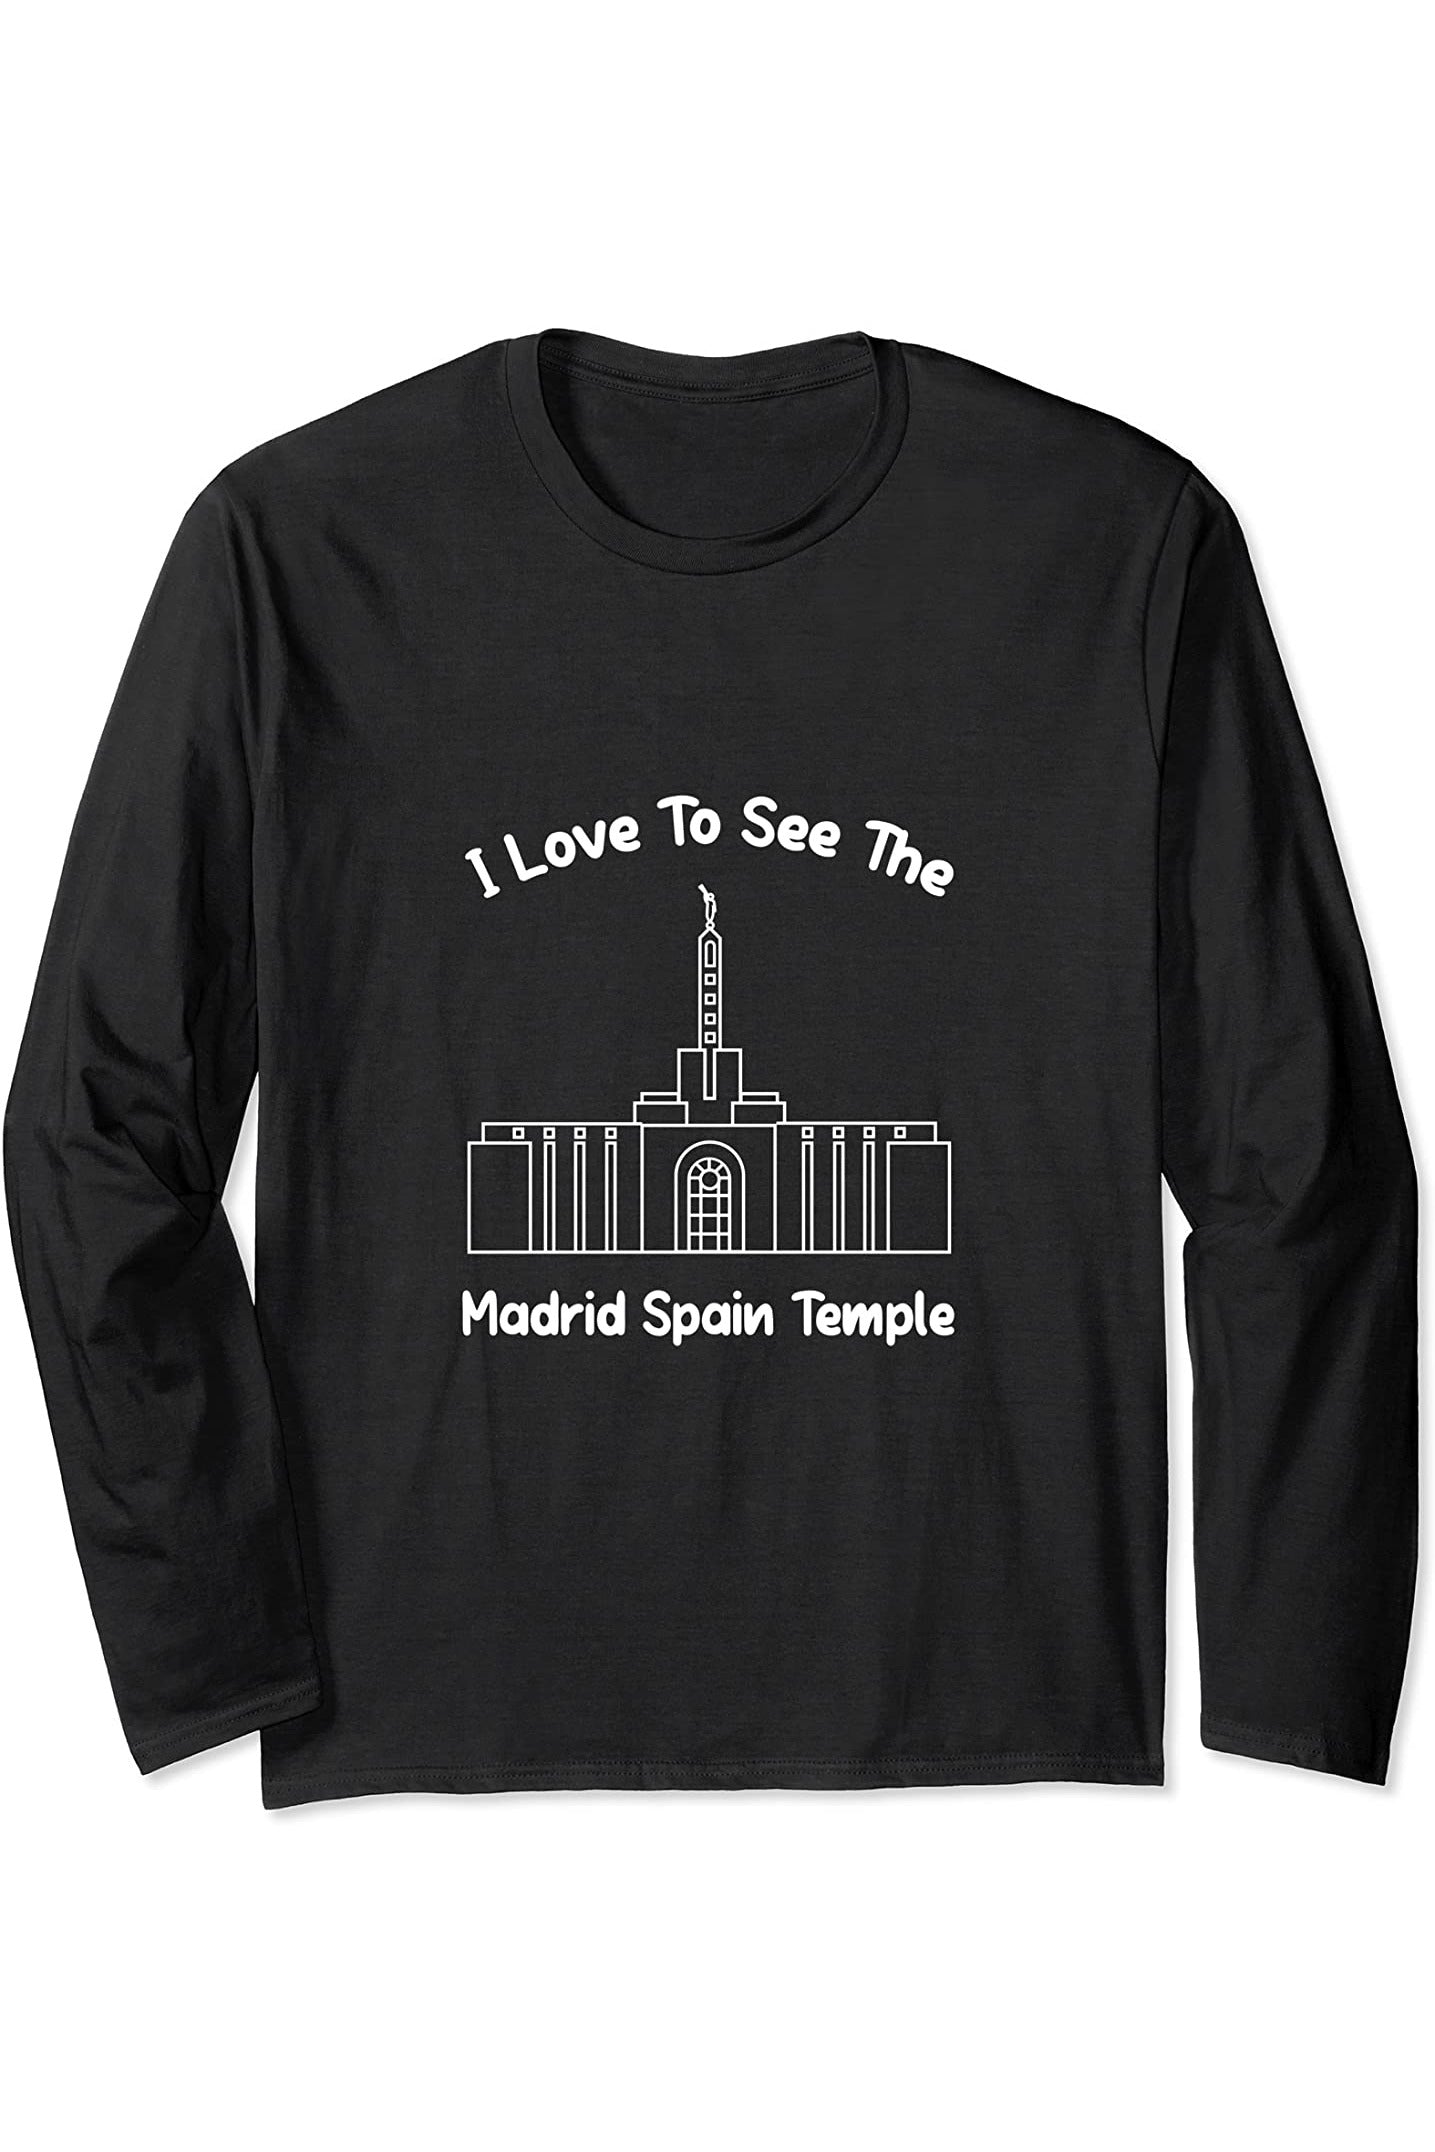 Madrid Spagna Tempio, amo vedere il mio tempio, primario Long Sleeve T-Shirt